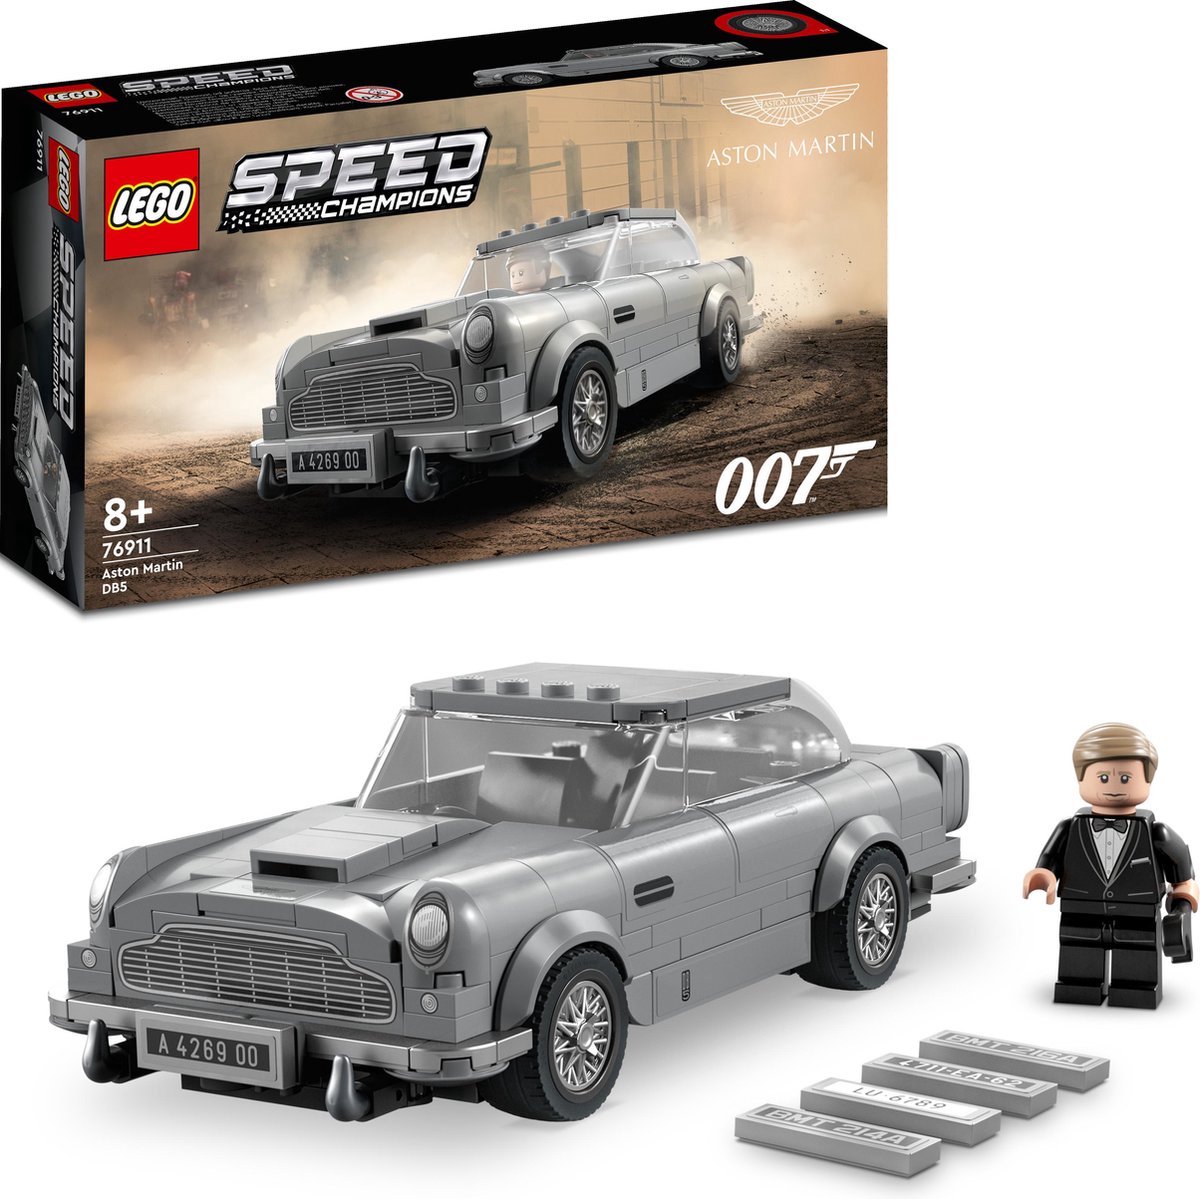 LEGO Speed Champions Aston Martin DB5 007 James Bond - 76911